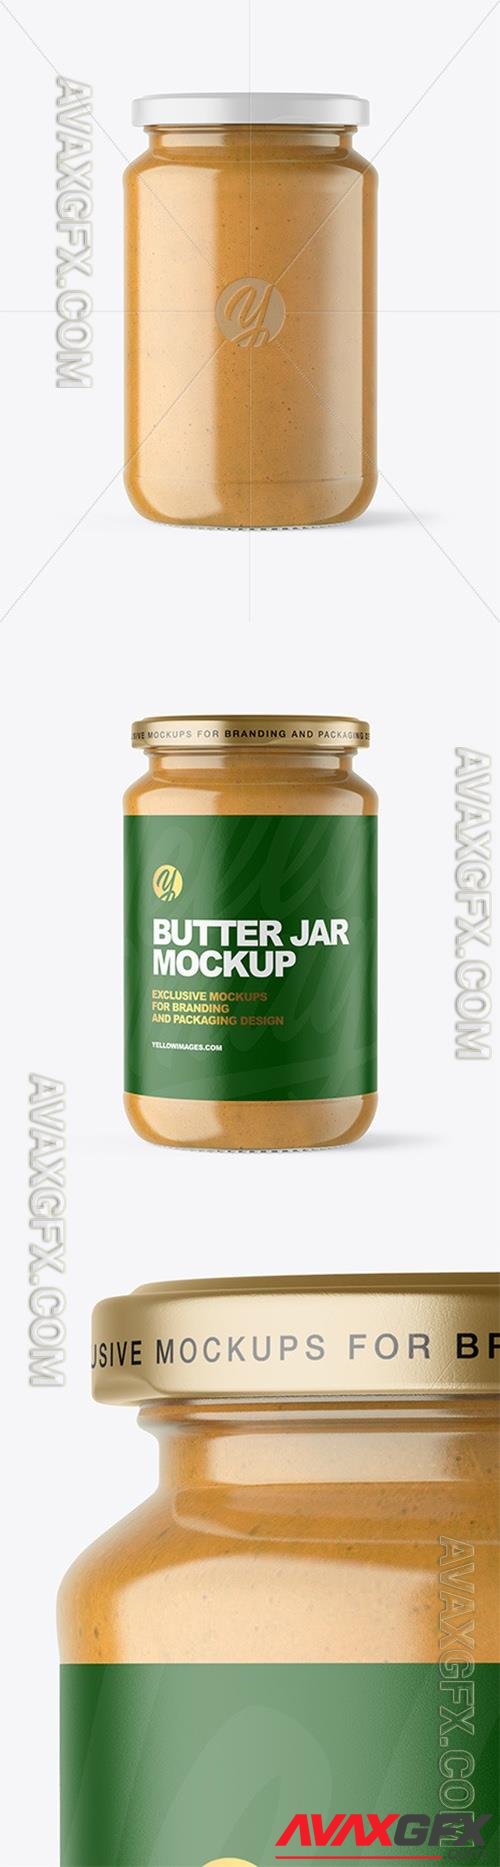 Clear Glass Jar with Peanut Butter Mockup 64516 TIF